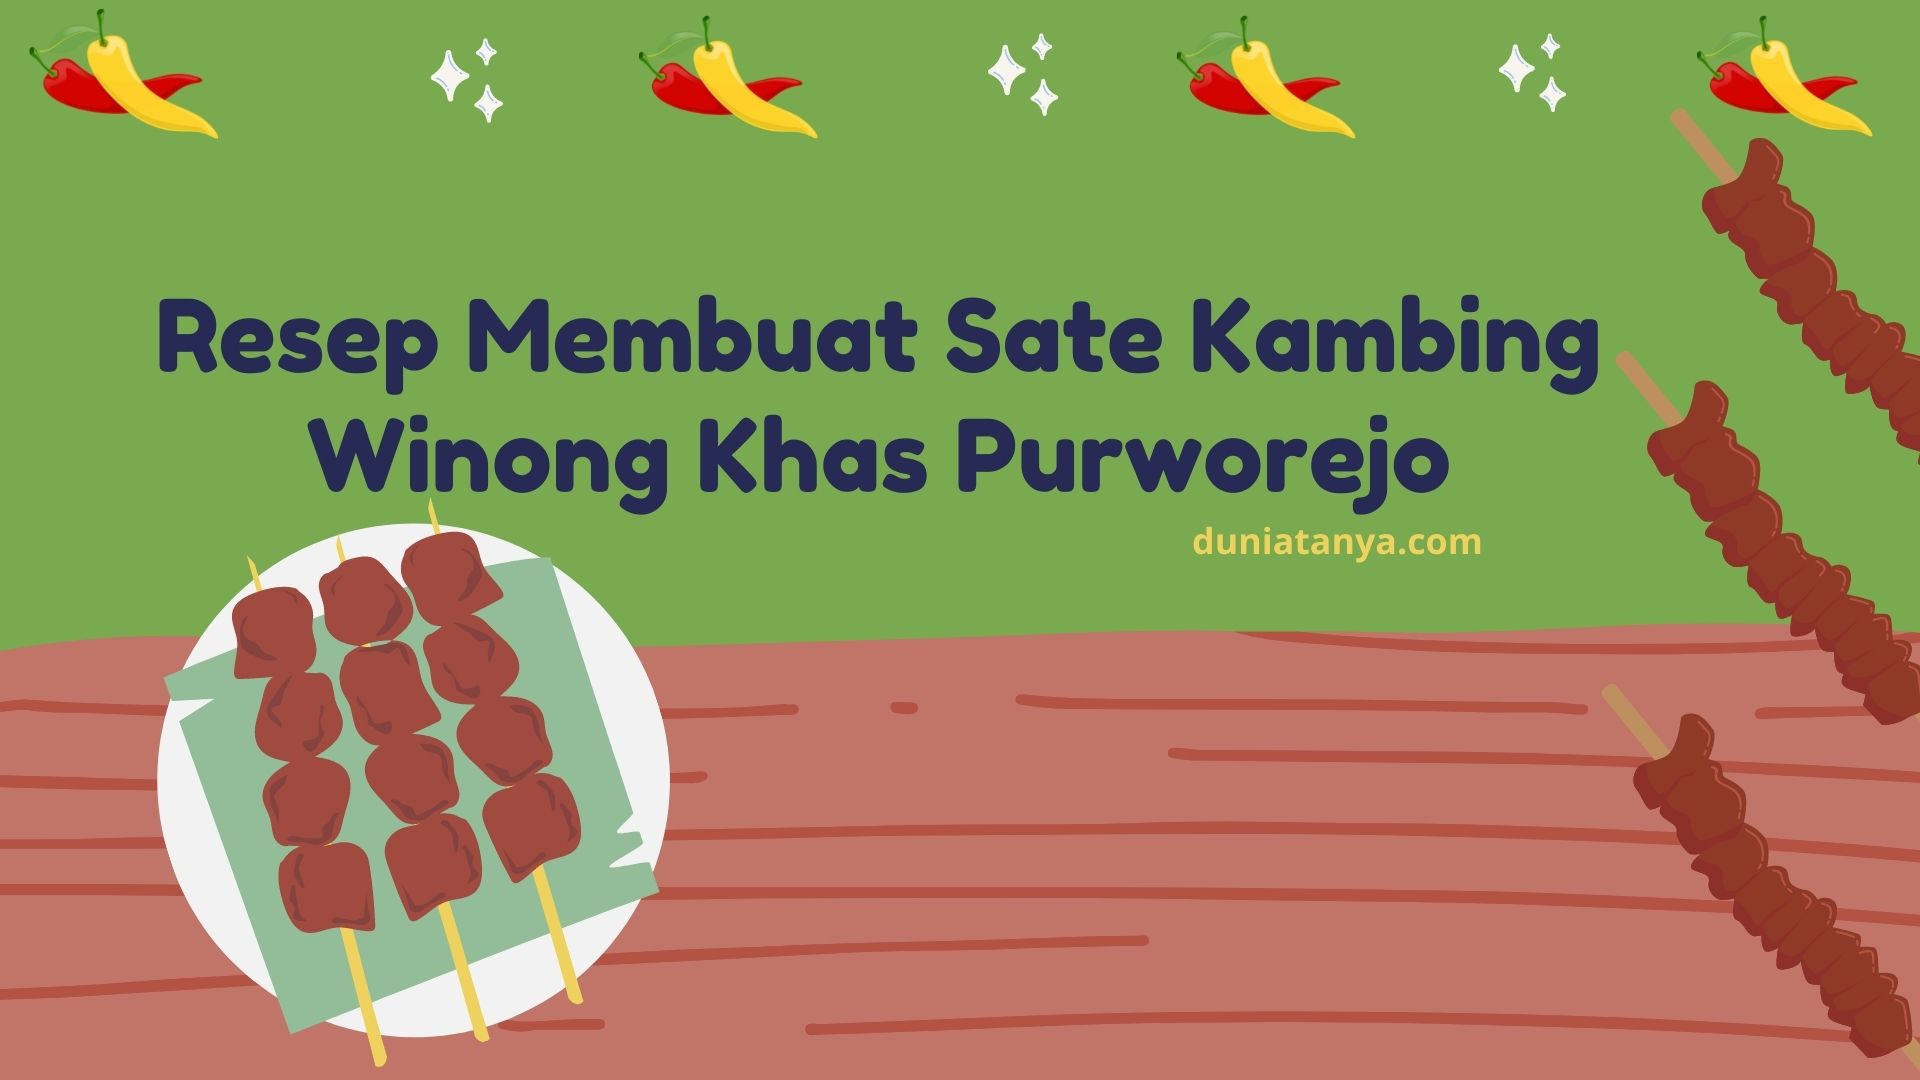 You are currently viewing Resep Membuat Sate Kambing Winong Khas Purworejo